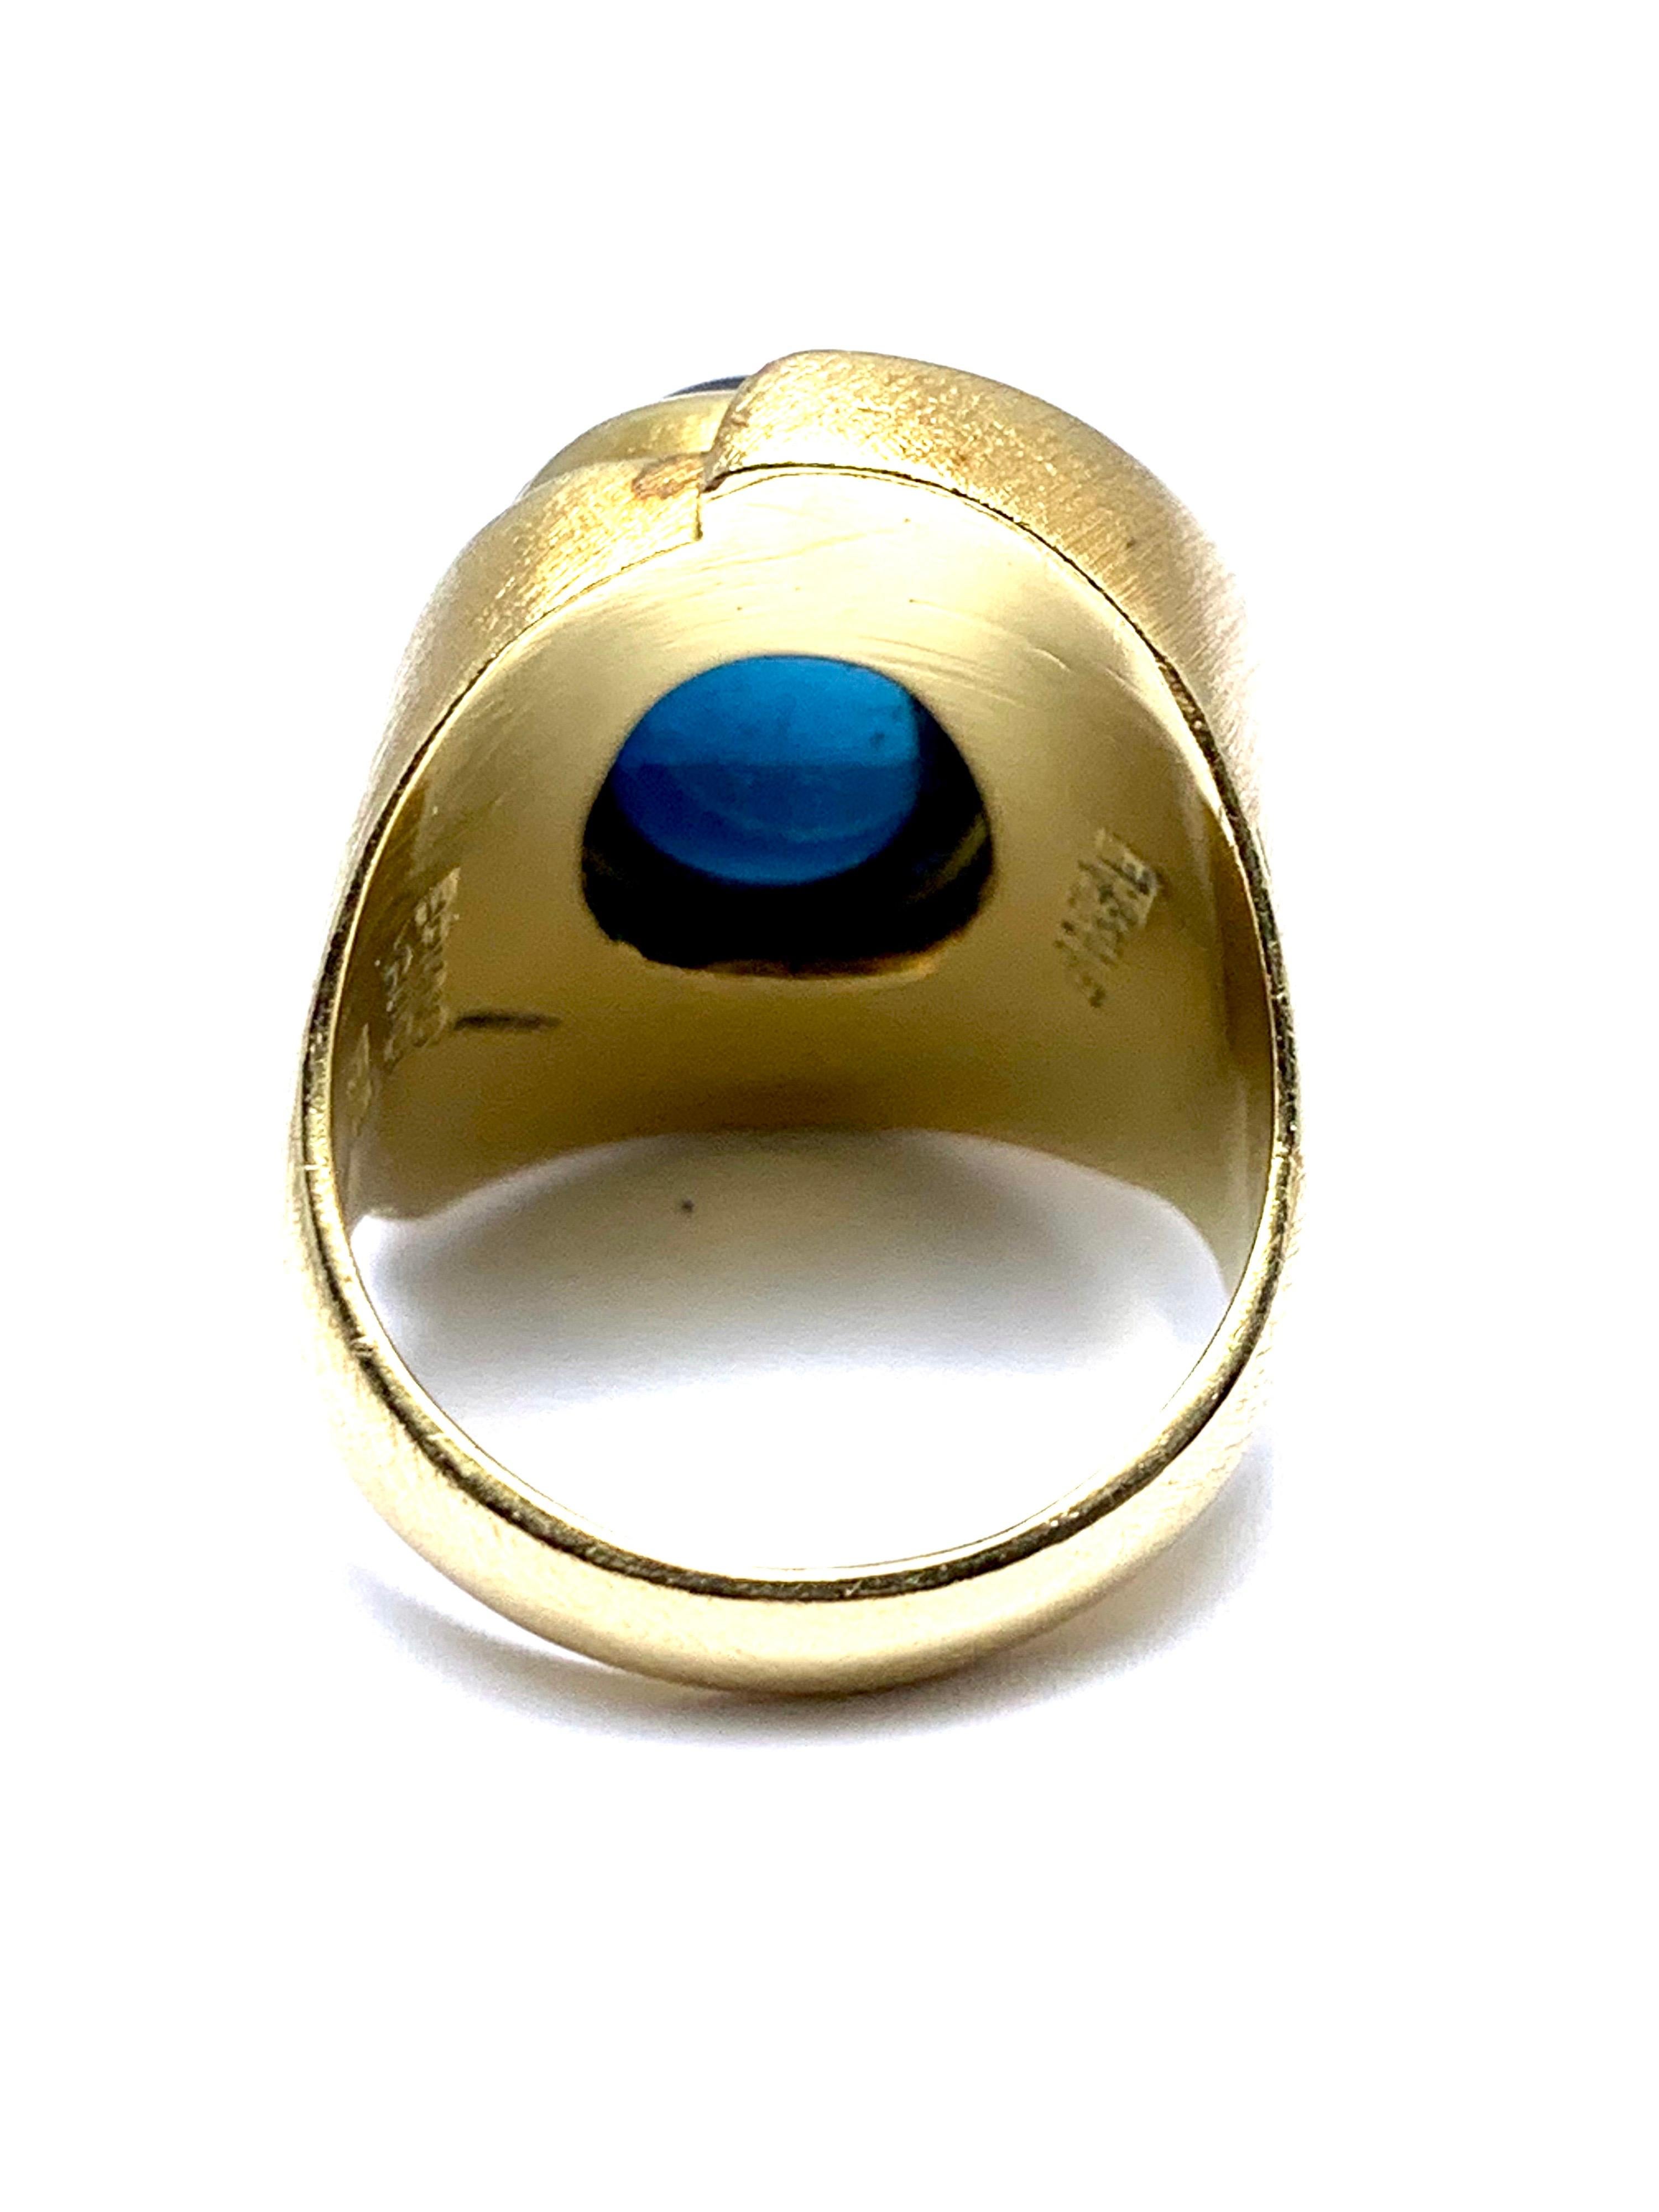 Bruno Guidi 6.43 Carat Cabochon Indicolite Tourmaline 18 Karat Yellow Gold Ring For Sale 1